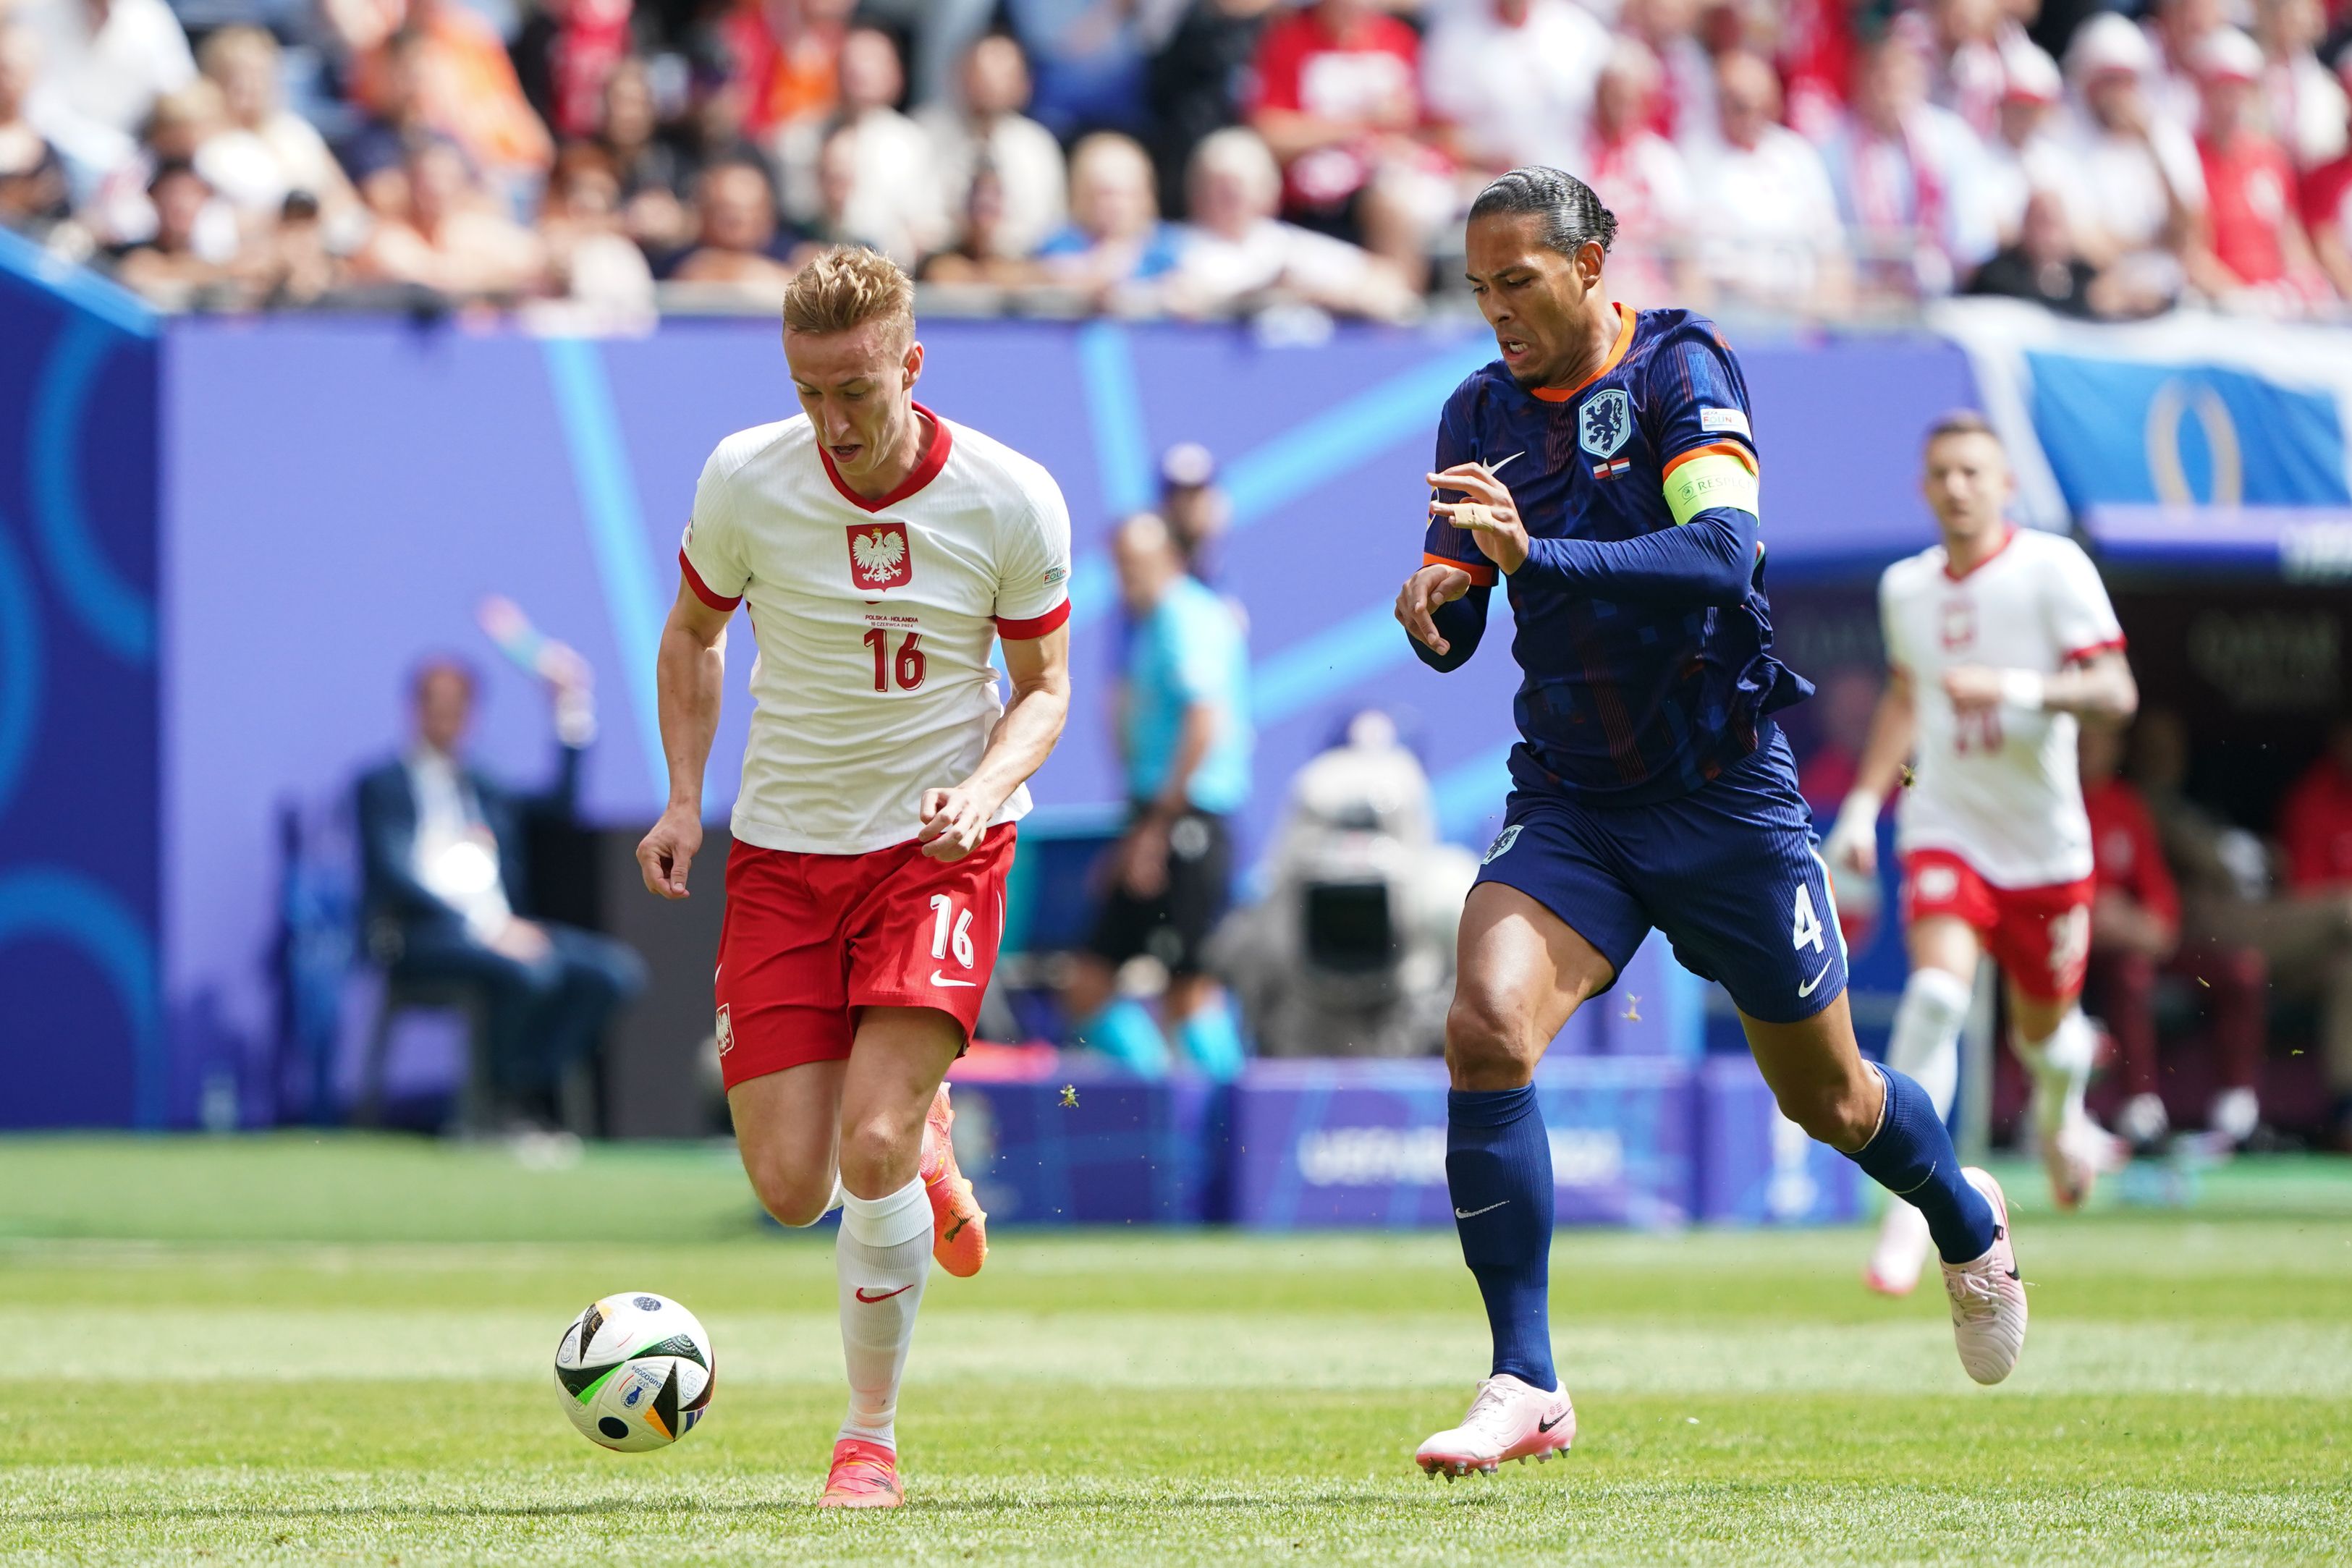 Polonia - Olanda 1-0, ACUM, pe digisport.ro. Buksa a deschis scorul